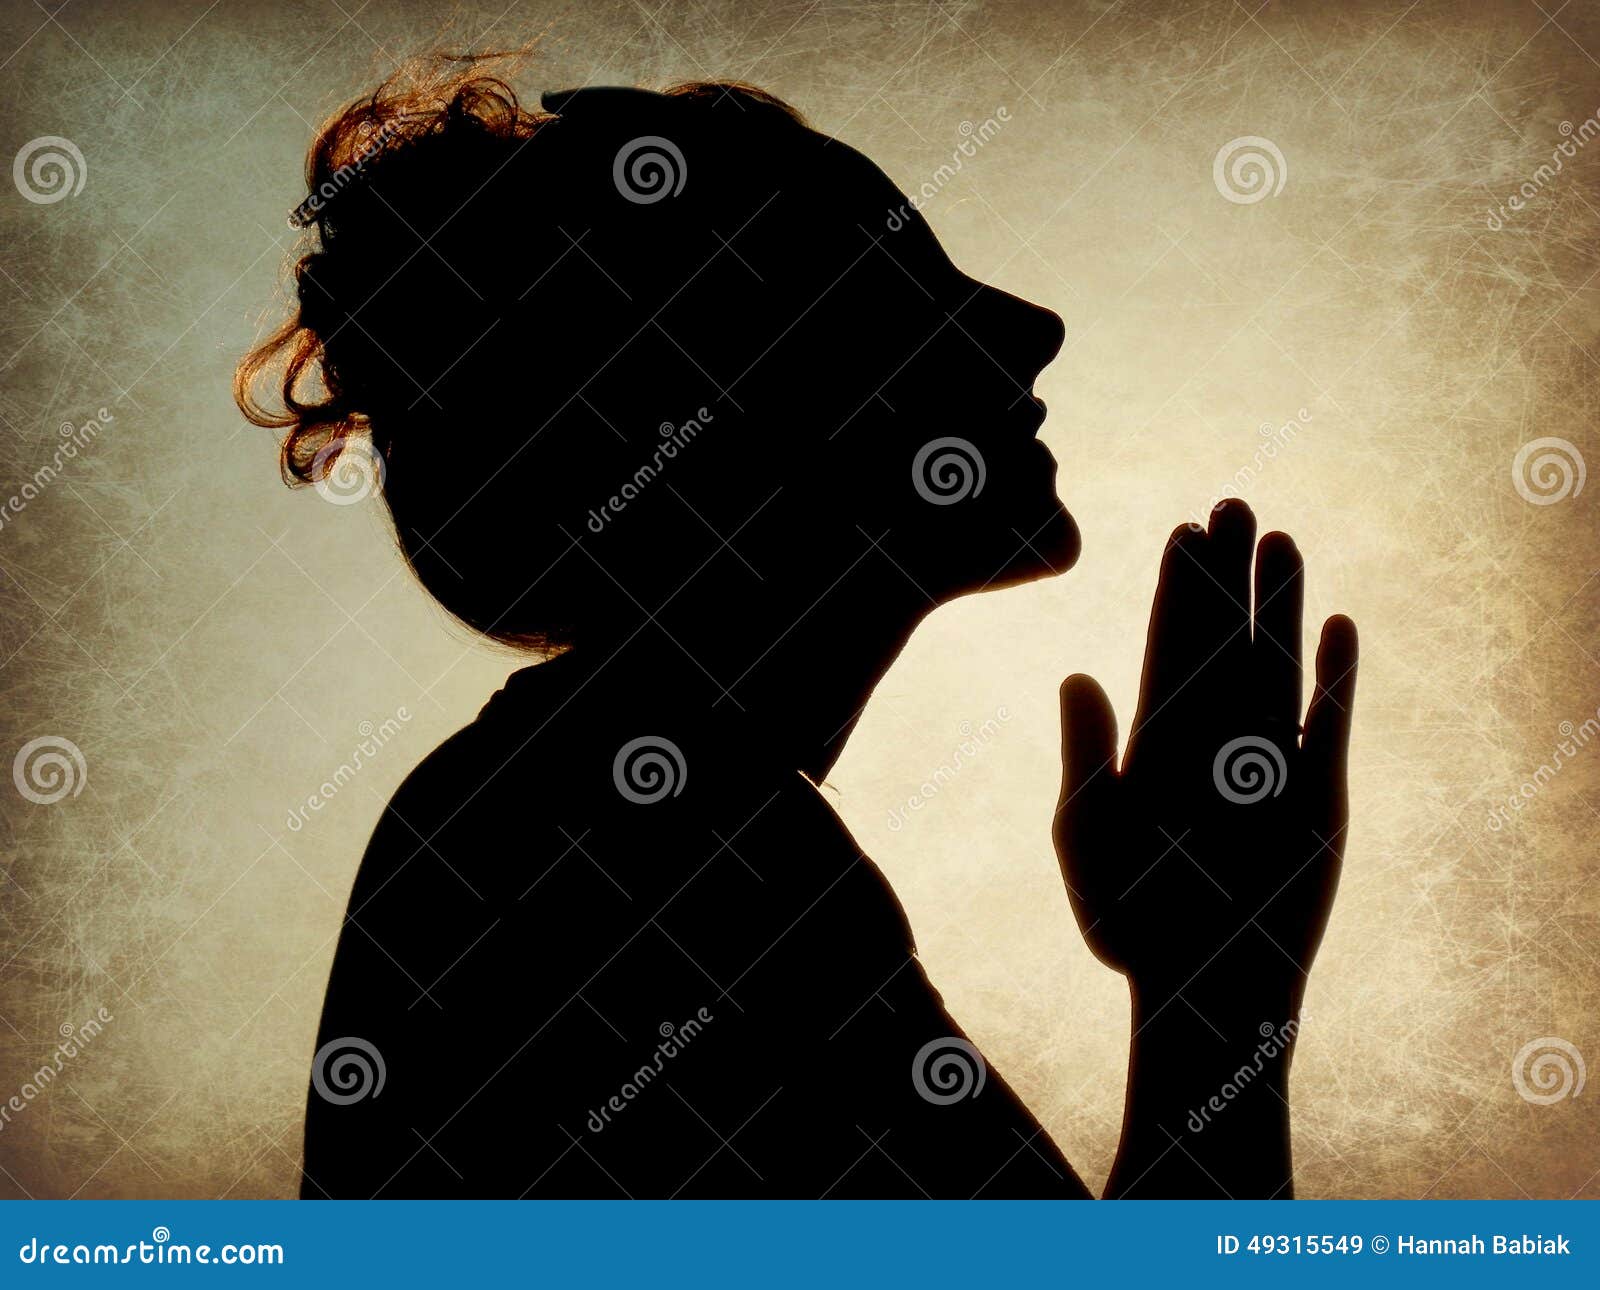 Woman Praying Silhouette stock image. Image of hair, intercede - 49315549